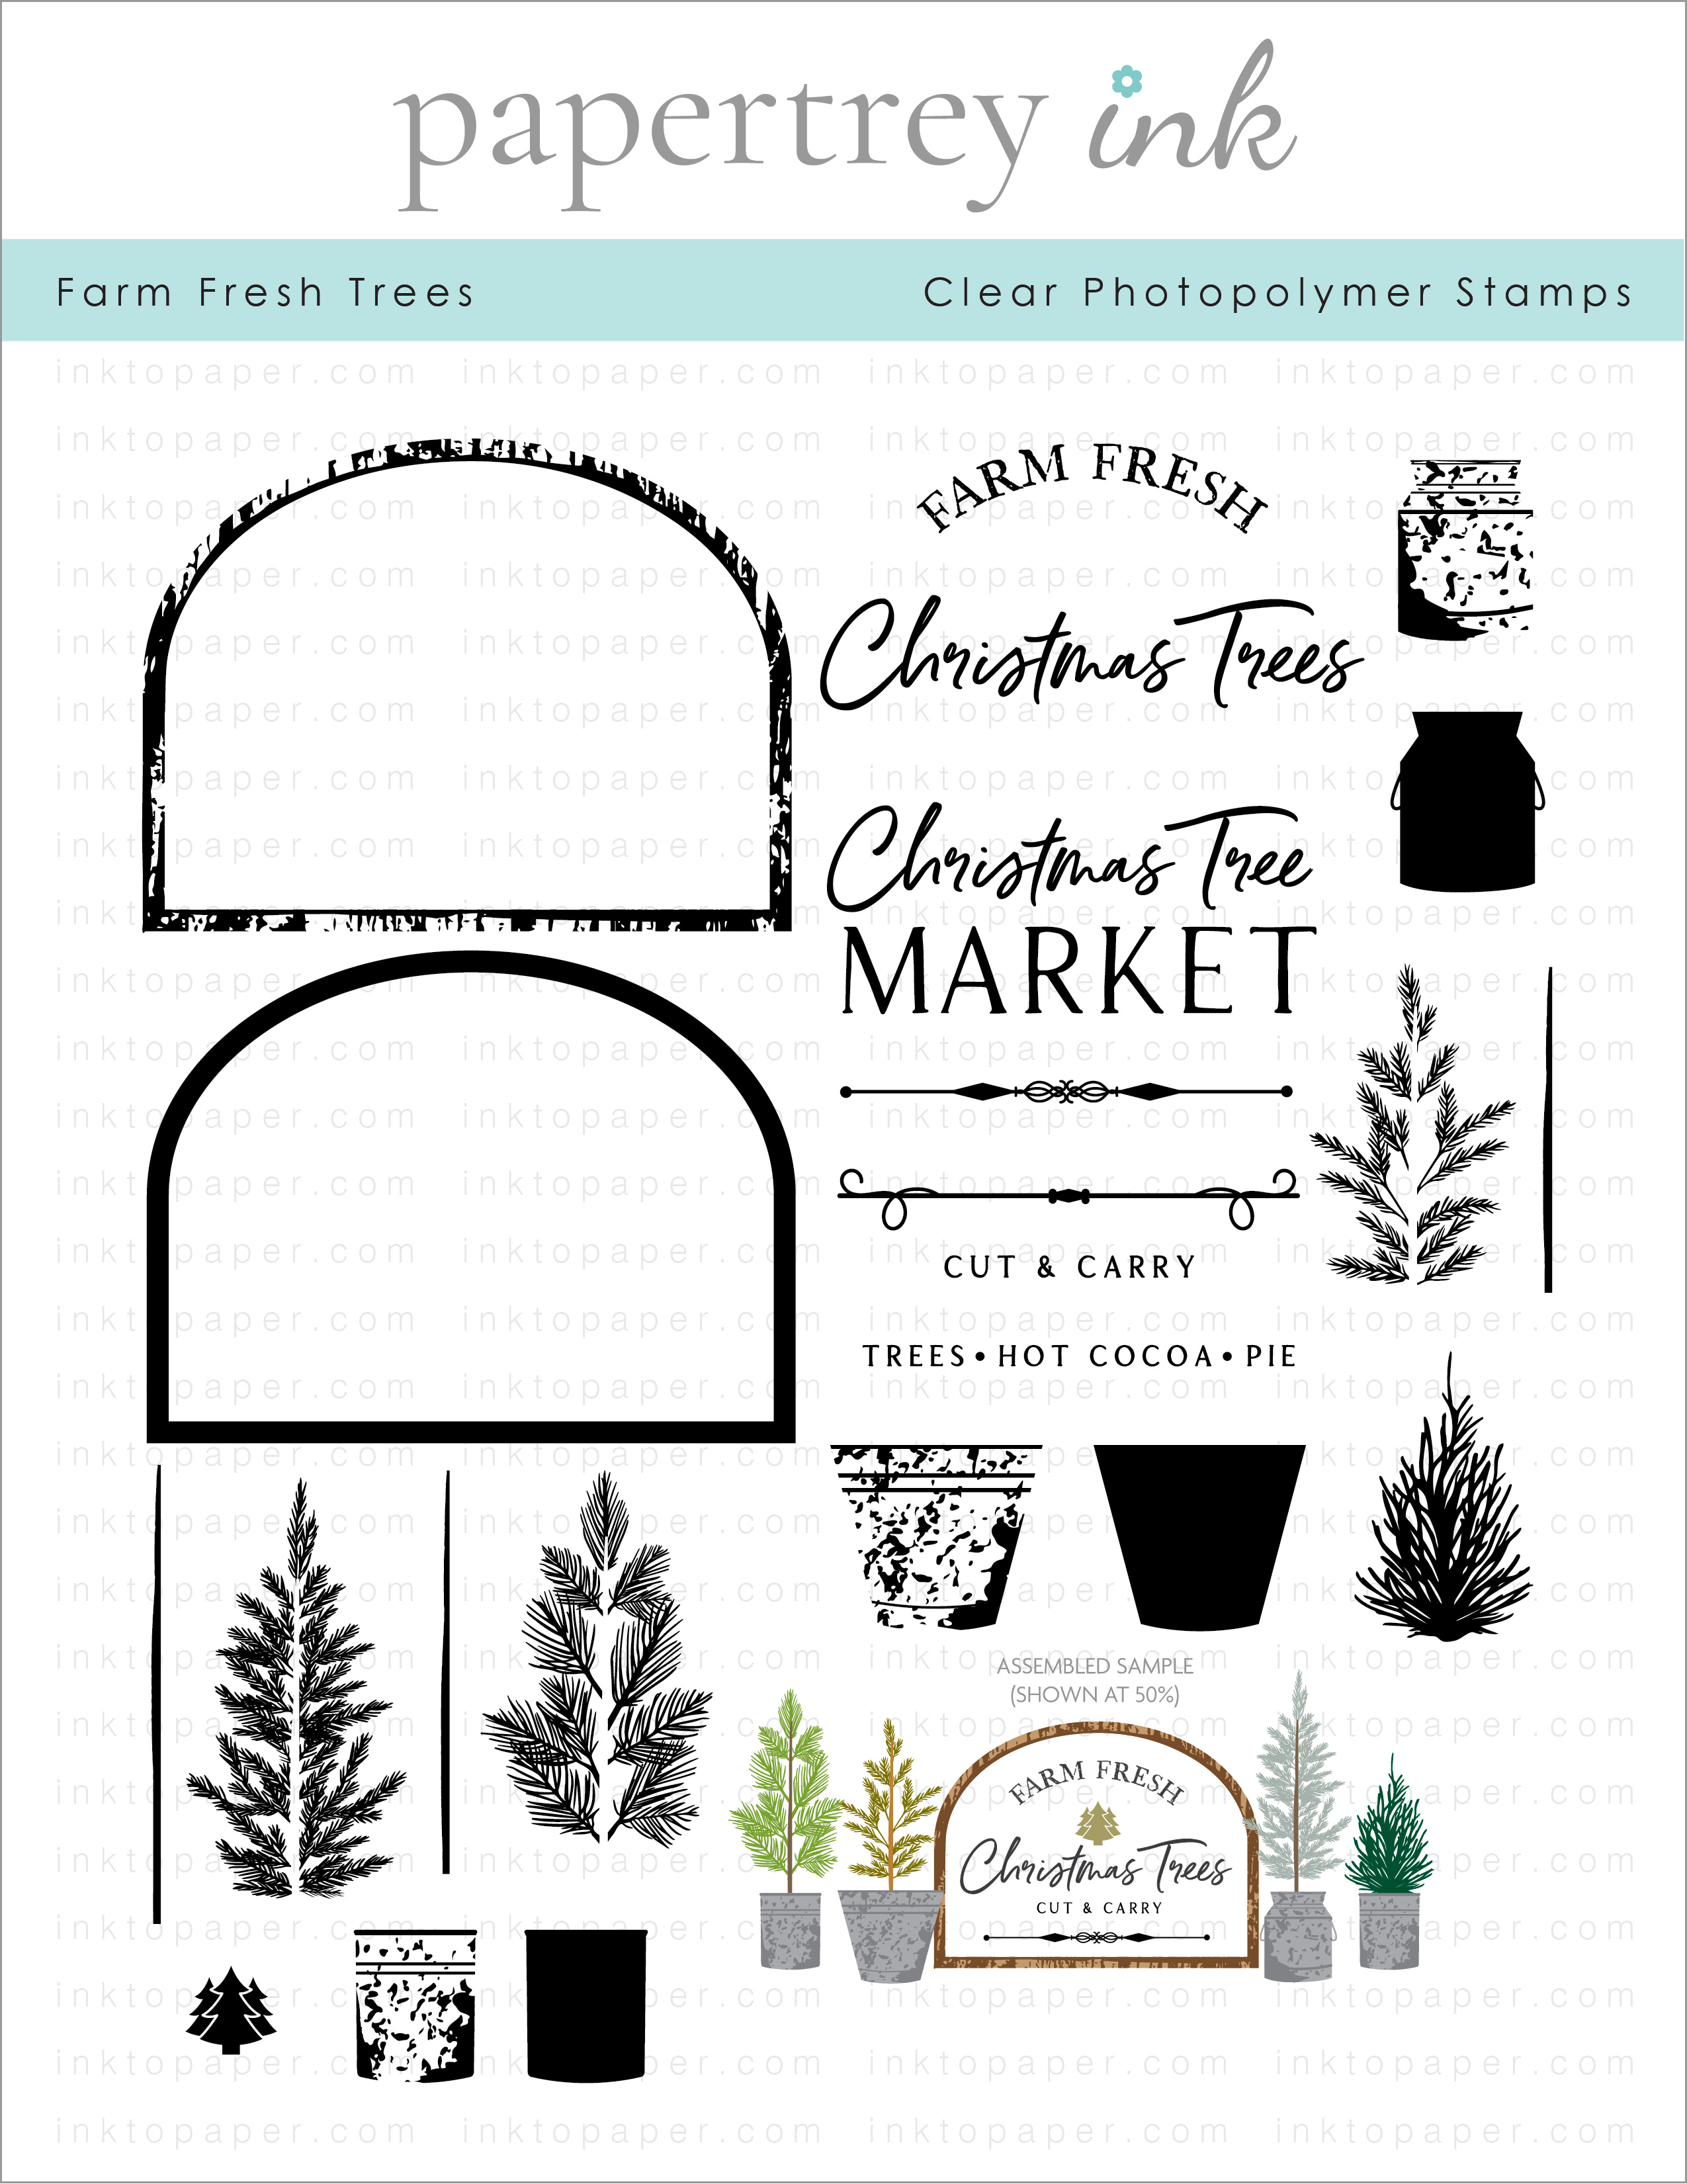 Farm Fresh Trees Stamp Set: Papertrey Ink